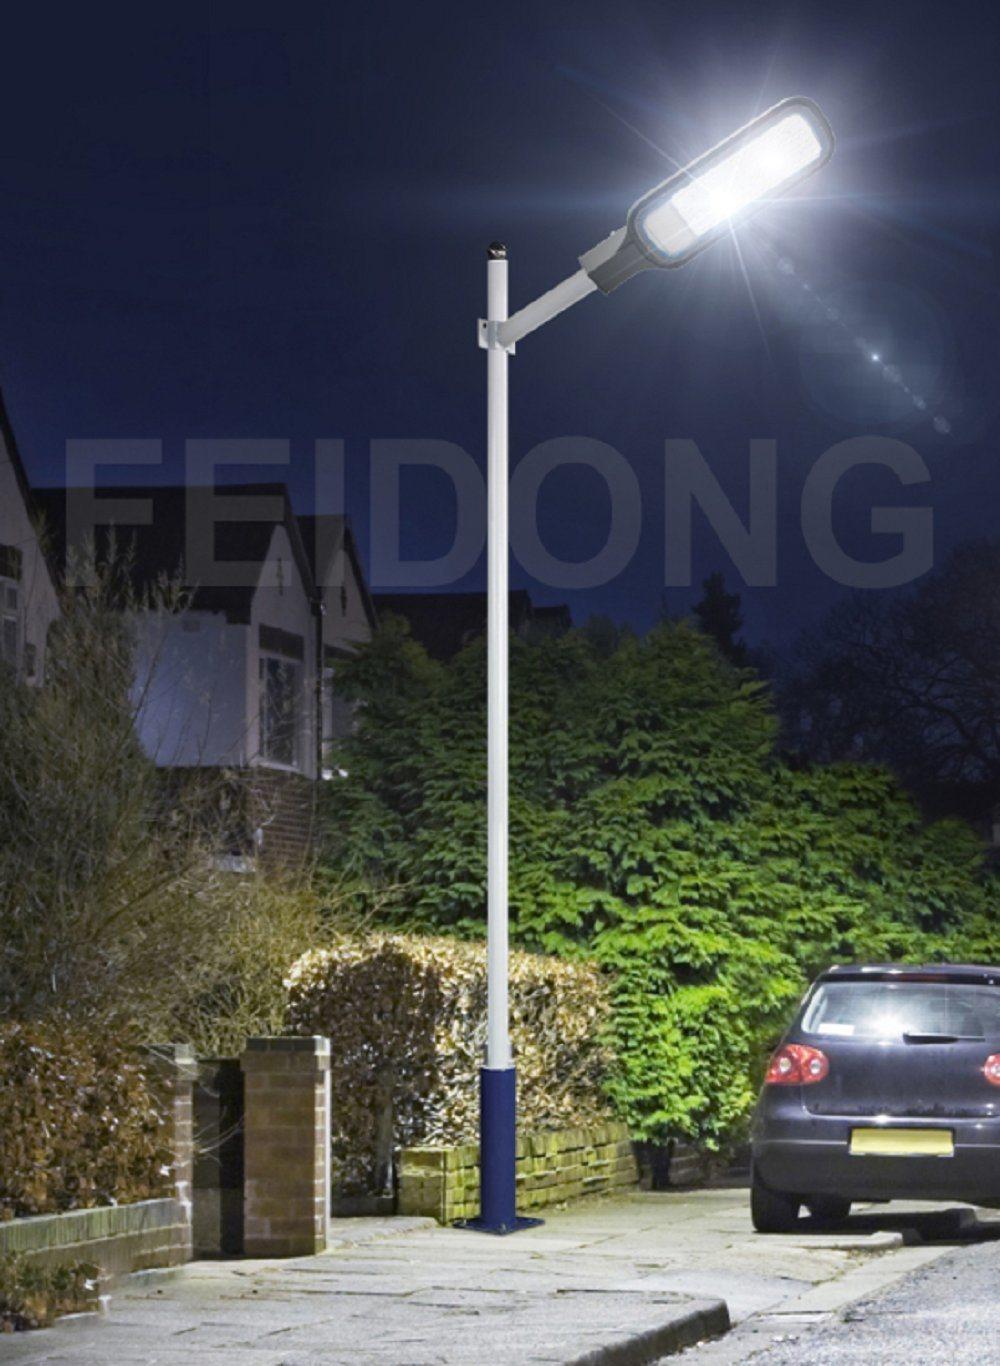 100% Power High Efficiency Highway Lighting Outdoor LED Street Light